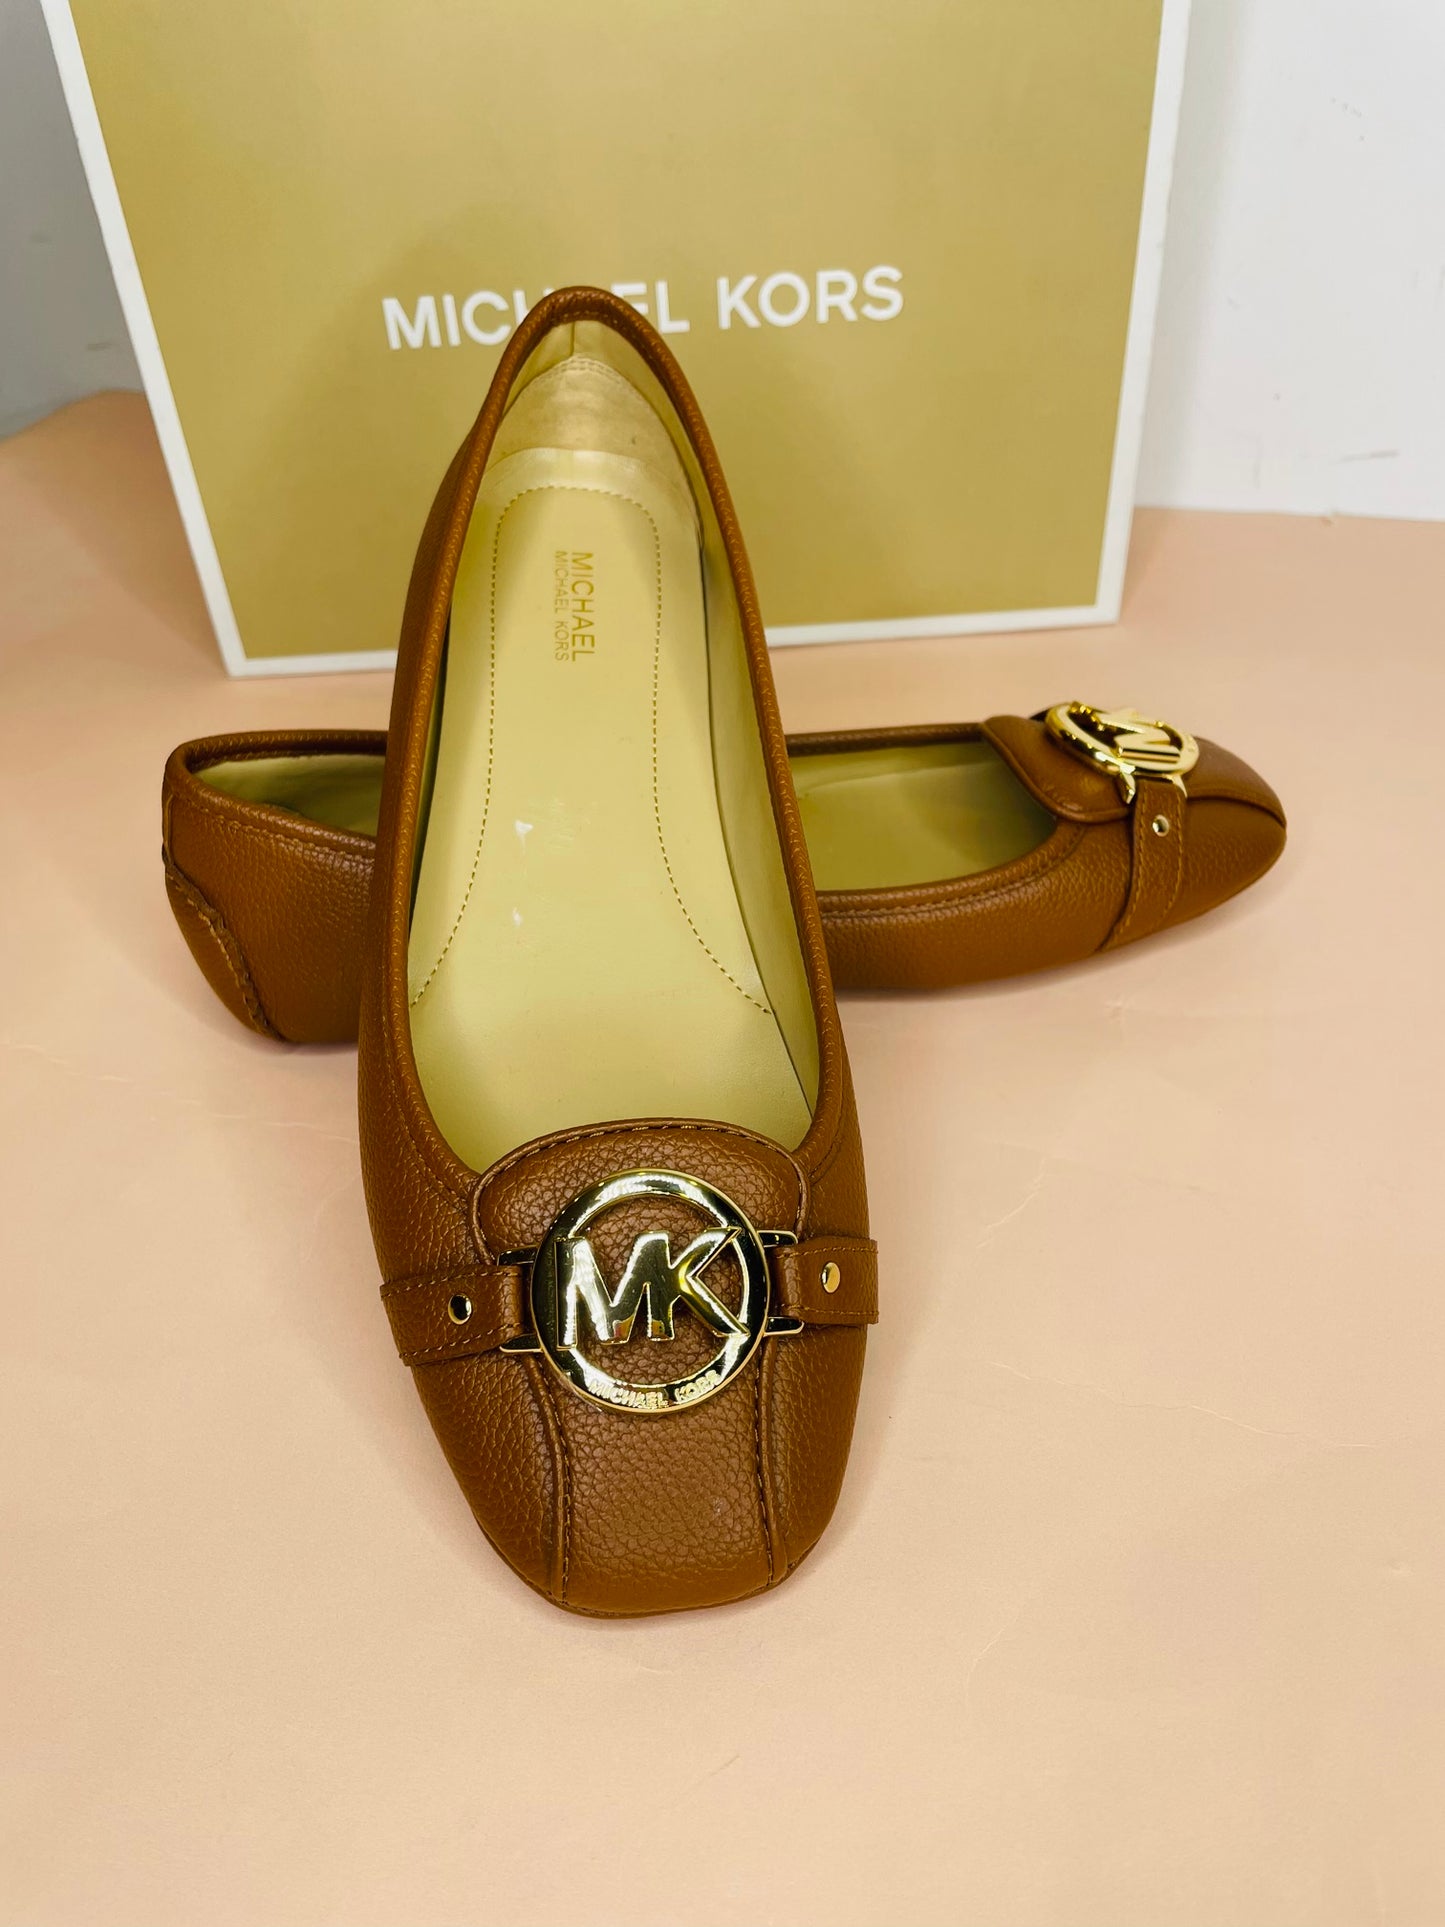 Michael kors shoes